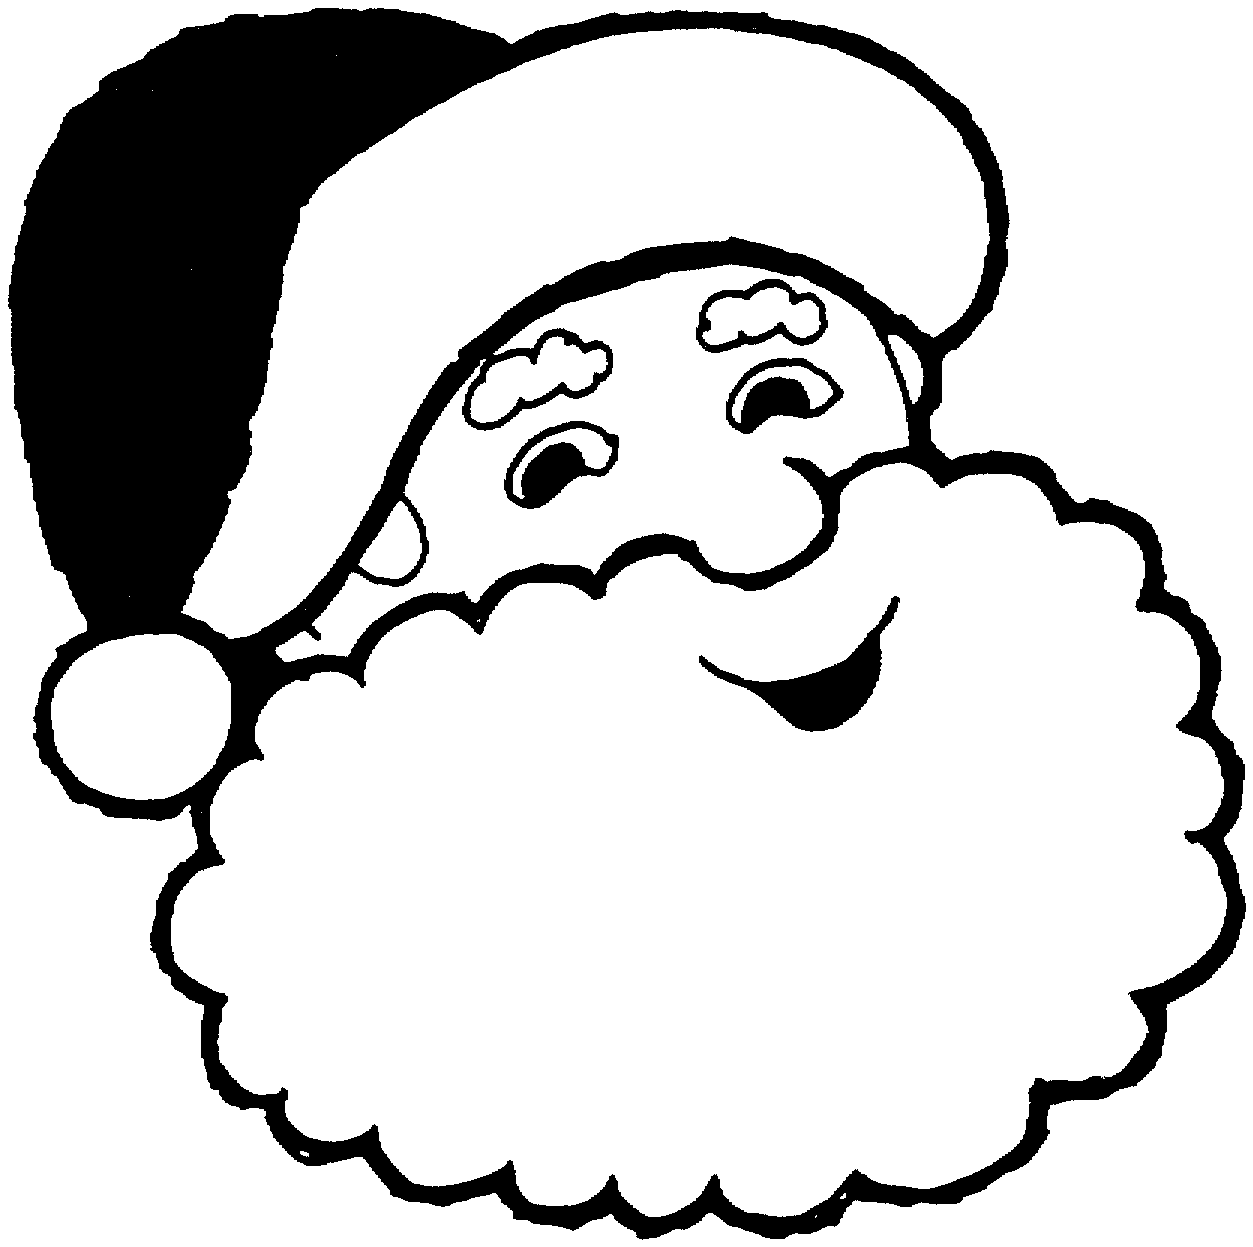 Santa face coloring page - Coloring Pages & Pictures - IMAGIXS